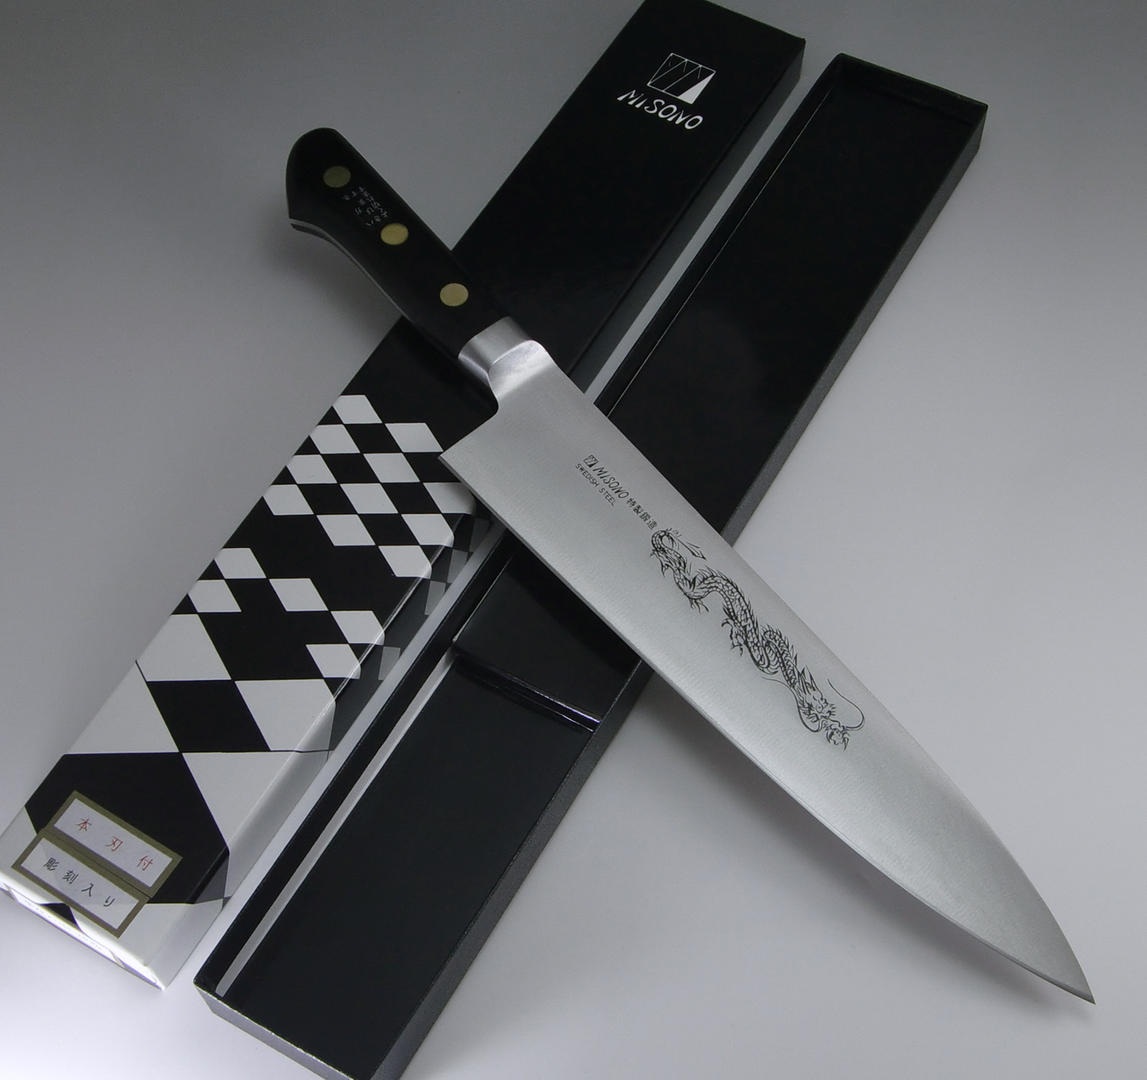 https://cdn11.bigcommerce.com/s-attnwxa/images/stencil/original/products/330/185138/misono-misono-swedish-high-carbon-steel-dragon-japanese-chefs-gyuto-knife-330mm__44374.1635508002.jpg?c=2&imbypass=on&imbypass=on